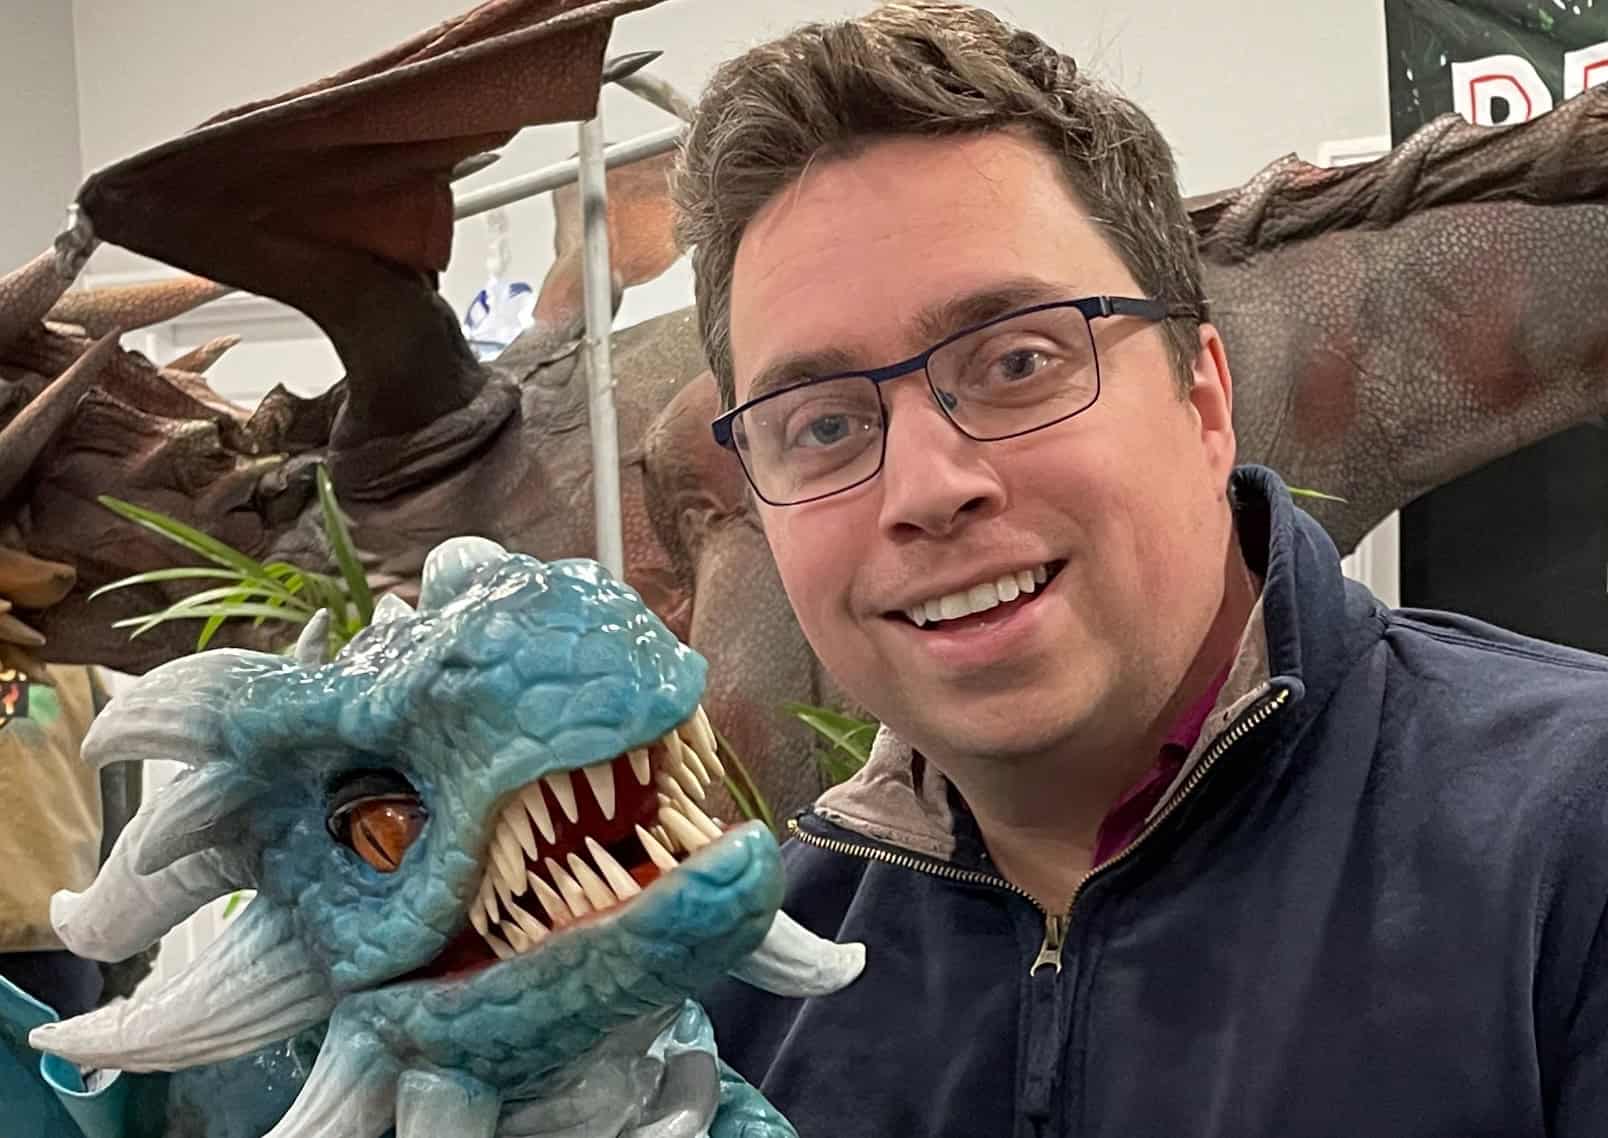 Me with a dinosaur